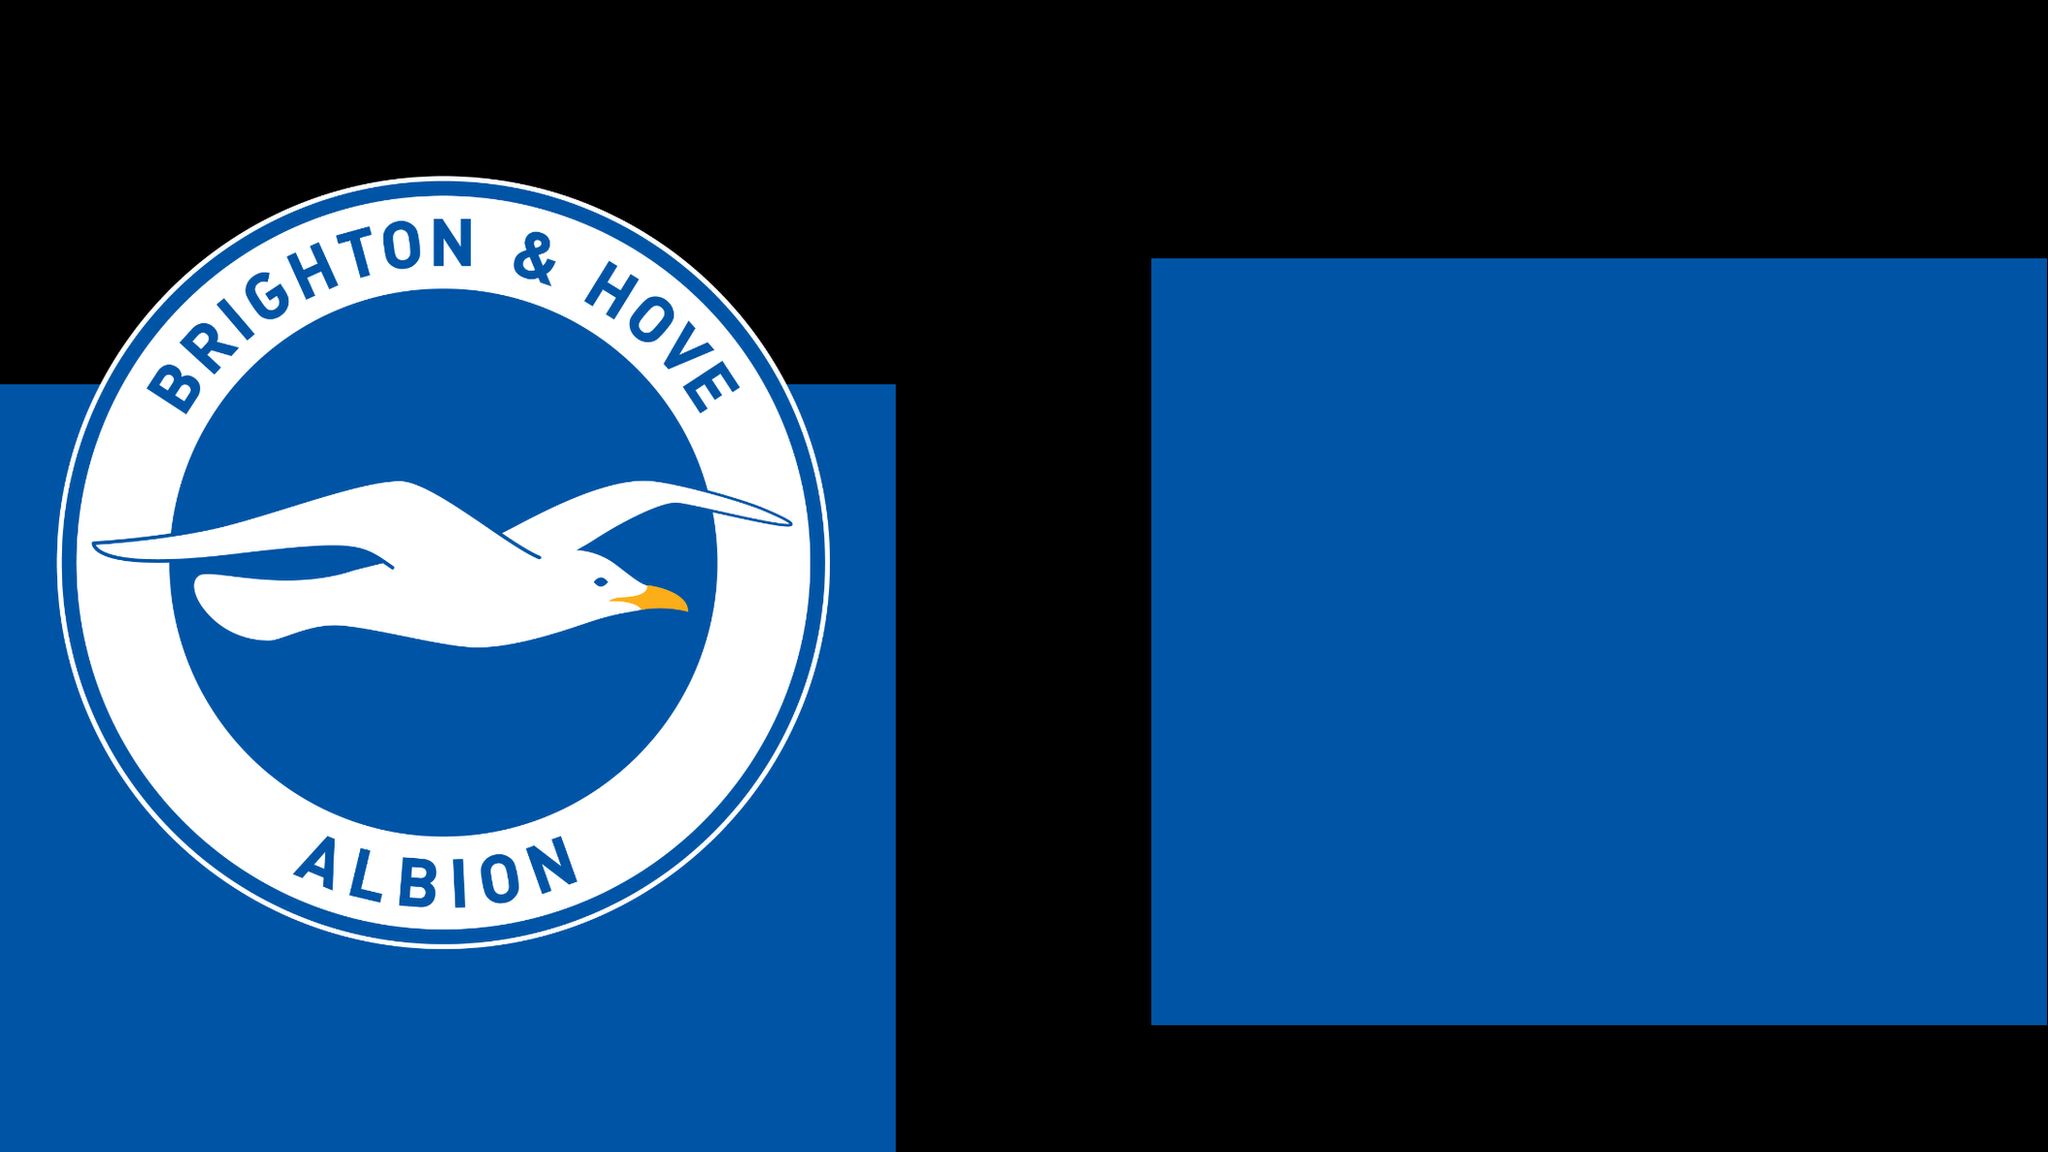 Brighton & Hove Albion club badge